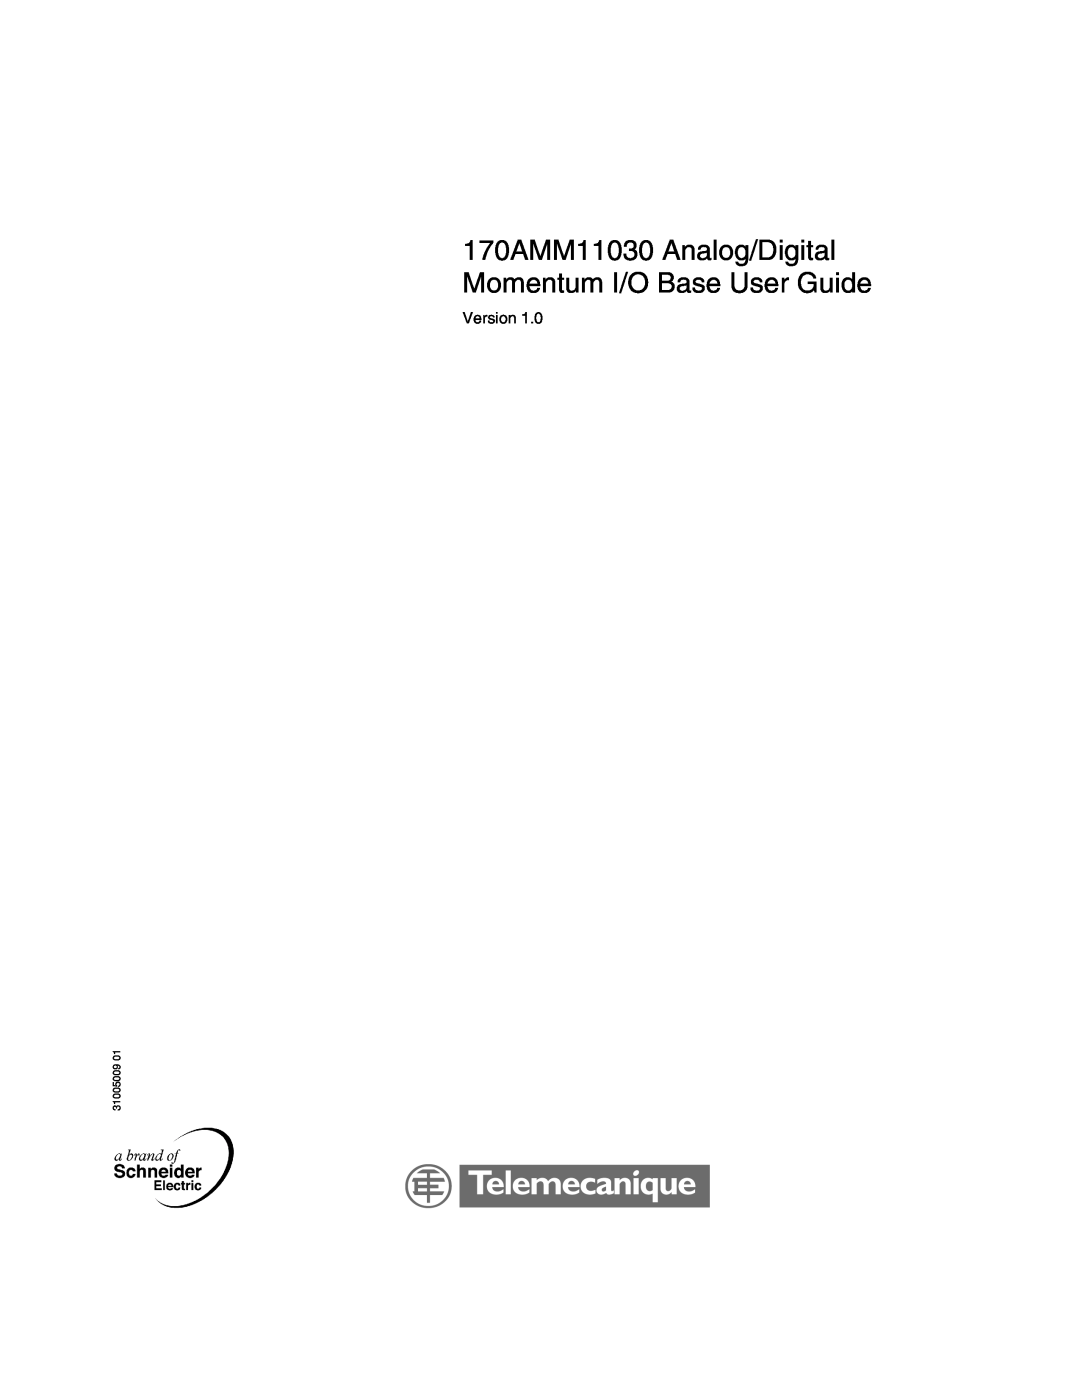 Schneider Electric manual Version, 170AMM11030 Analog/Digital Momentum I/O Base User Guide, 31005009 